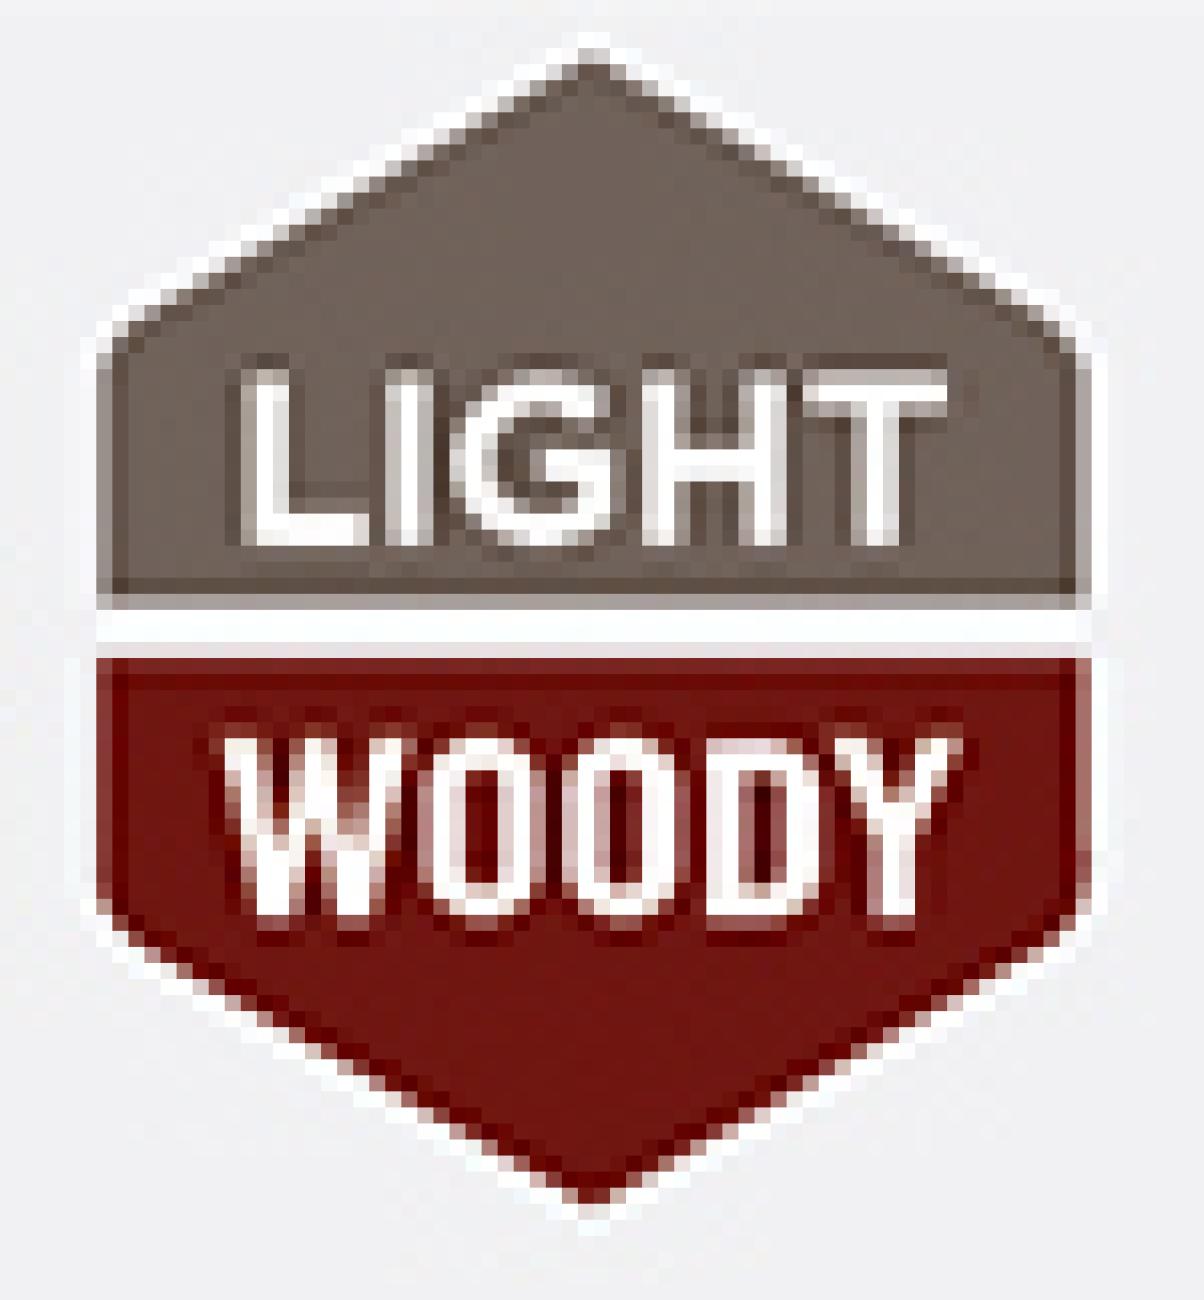 Light Woody Whisky